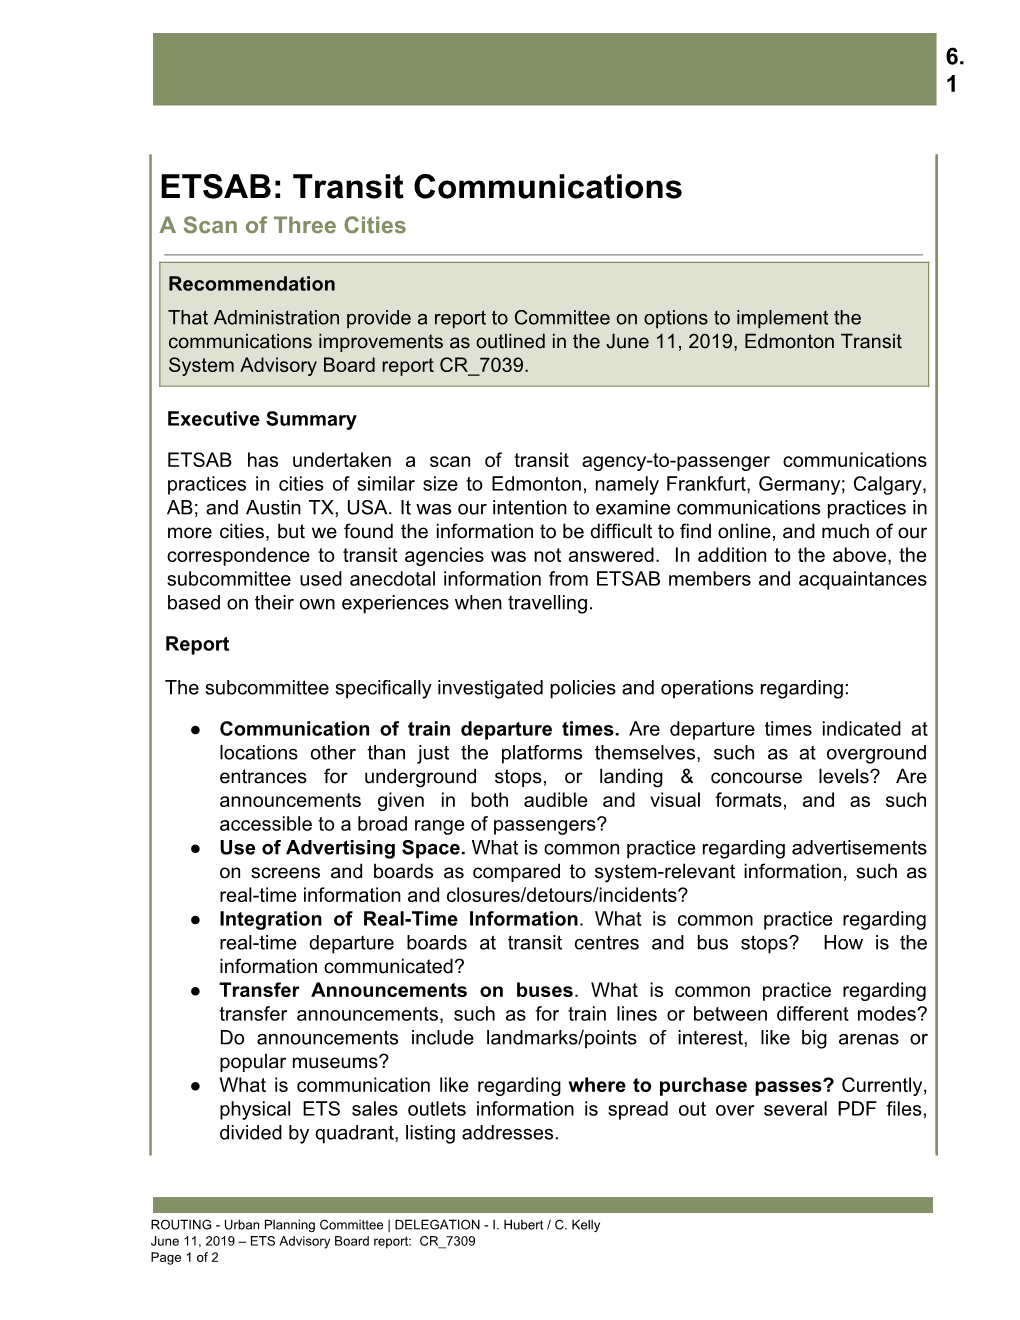 CR 7309 ETSAB Transit Communications a Scan of Three